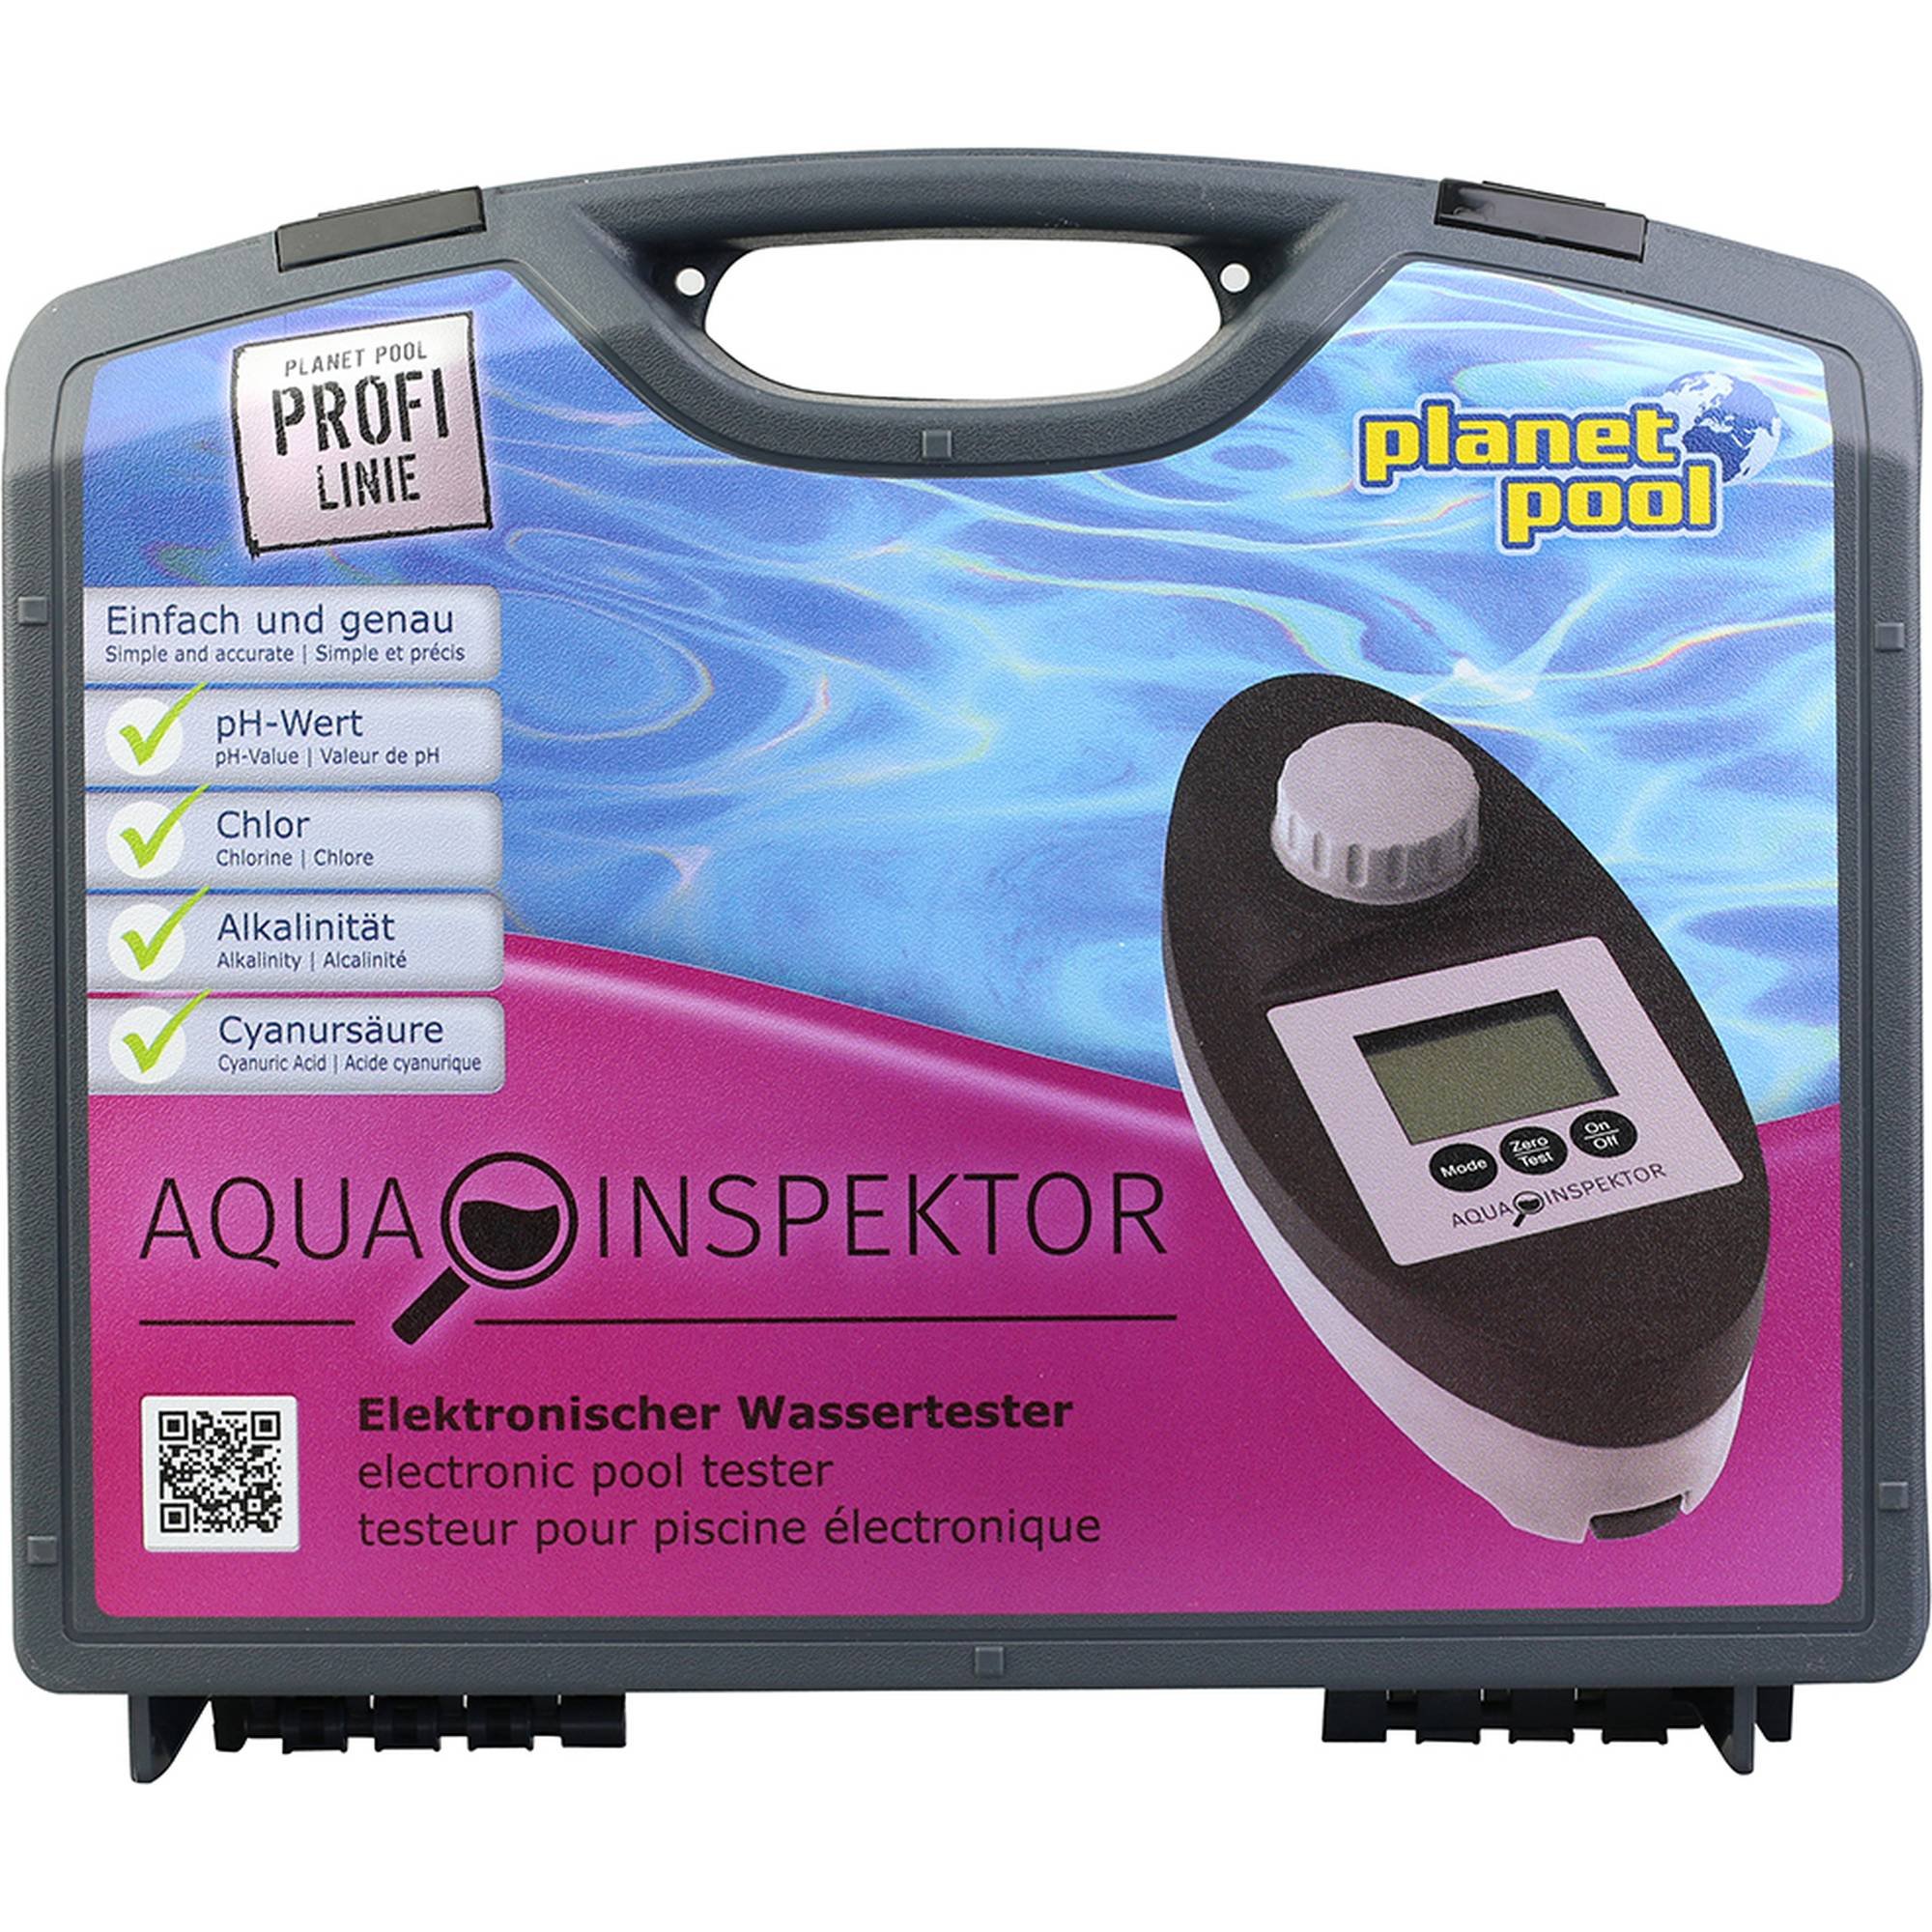 Aqua Inspektor Profi-Messgerät Wassetest, Chlor/pH/Cya/Alkalinität, im Planet Pool Koffer